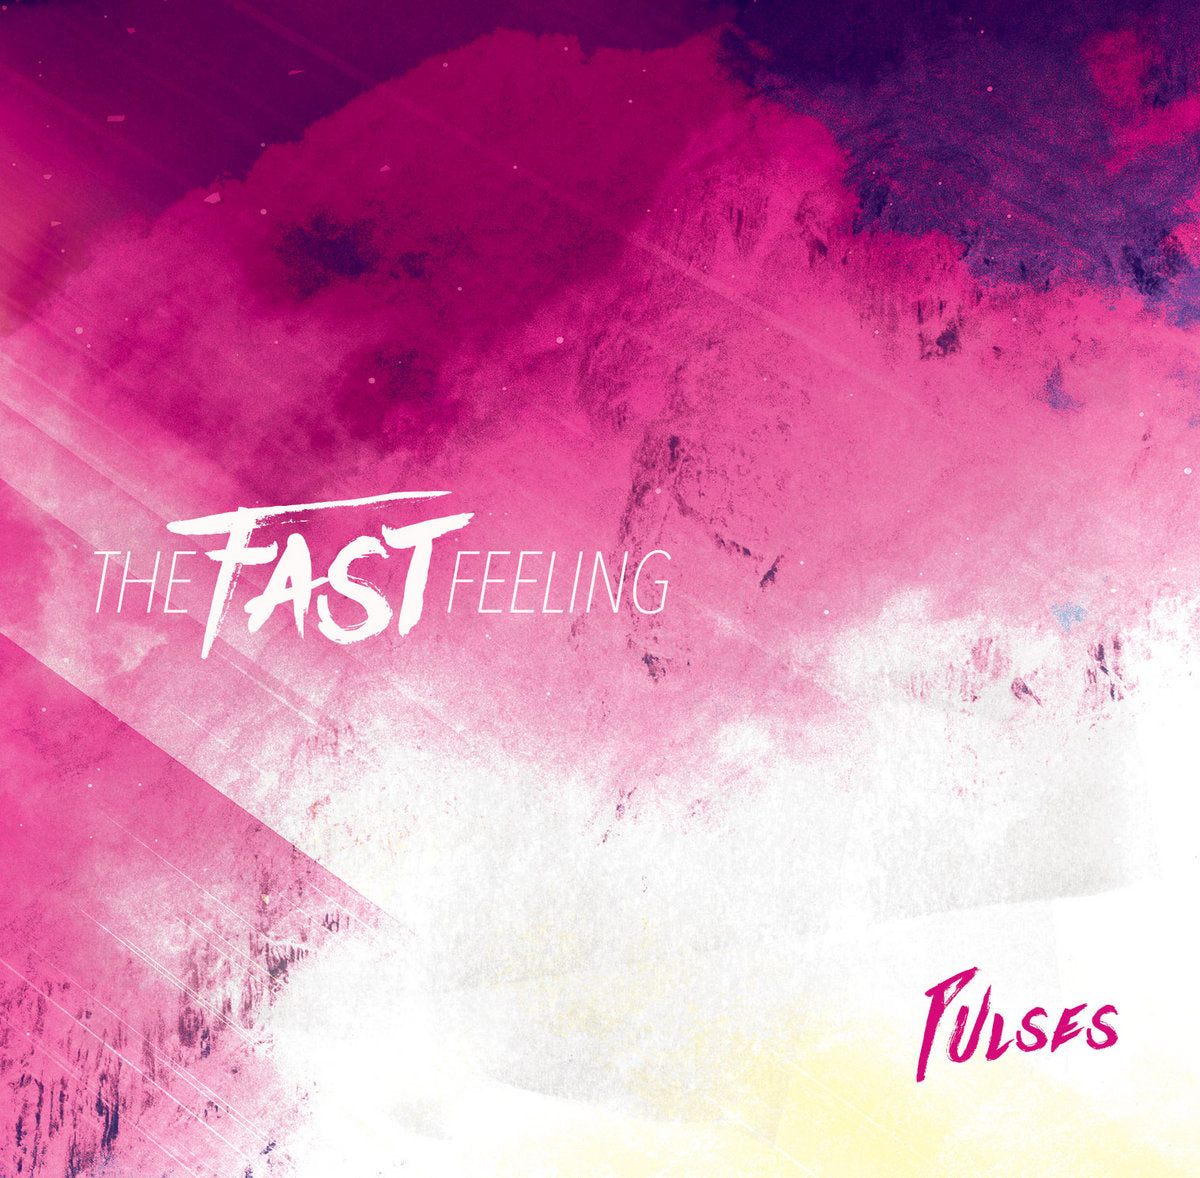 Fast Feeling - Pulses